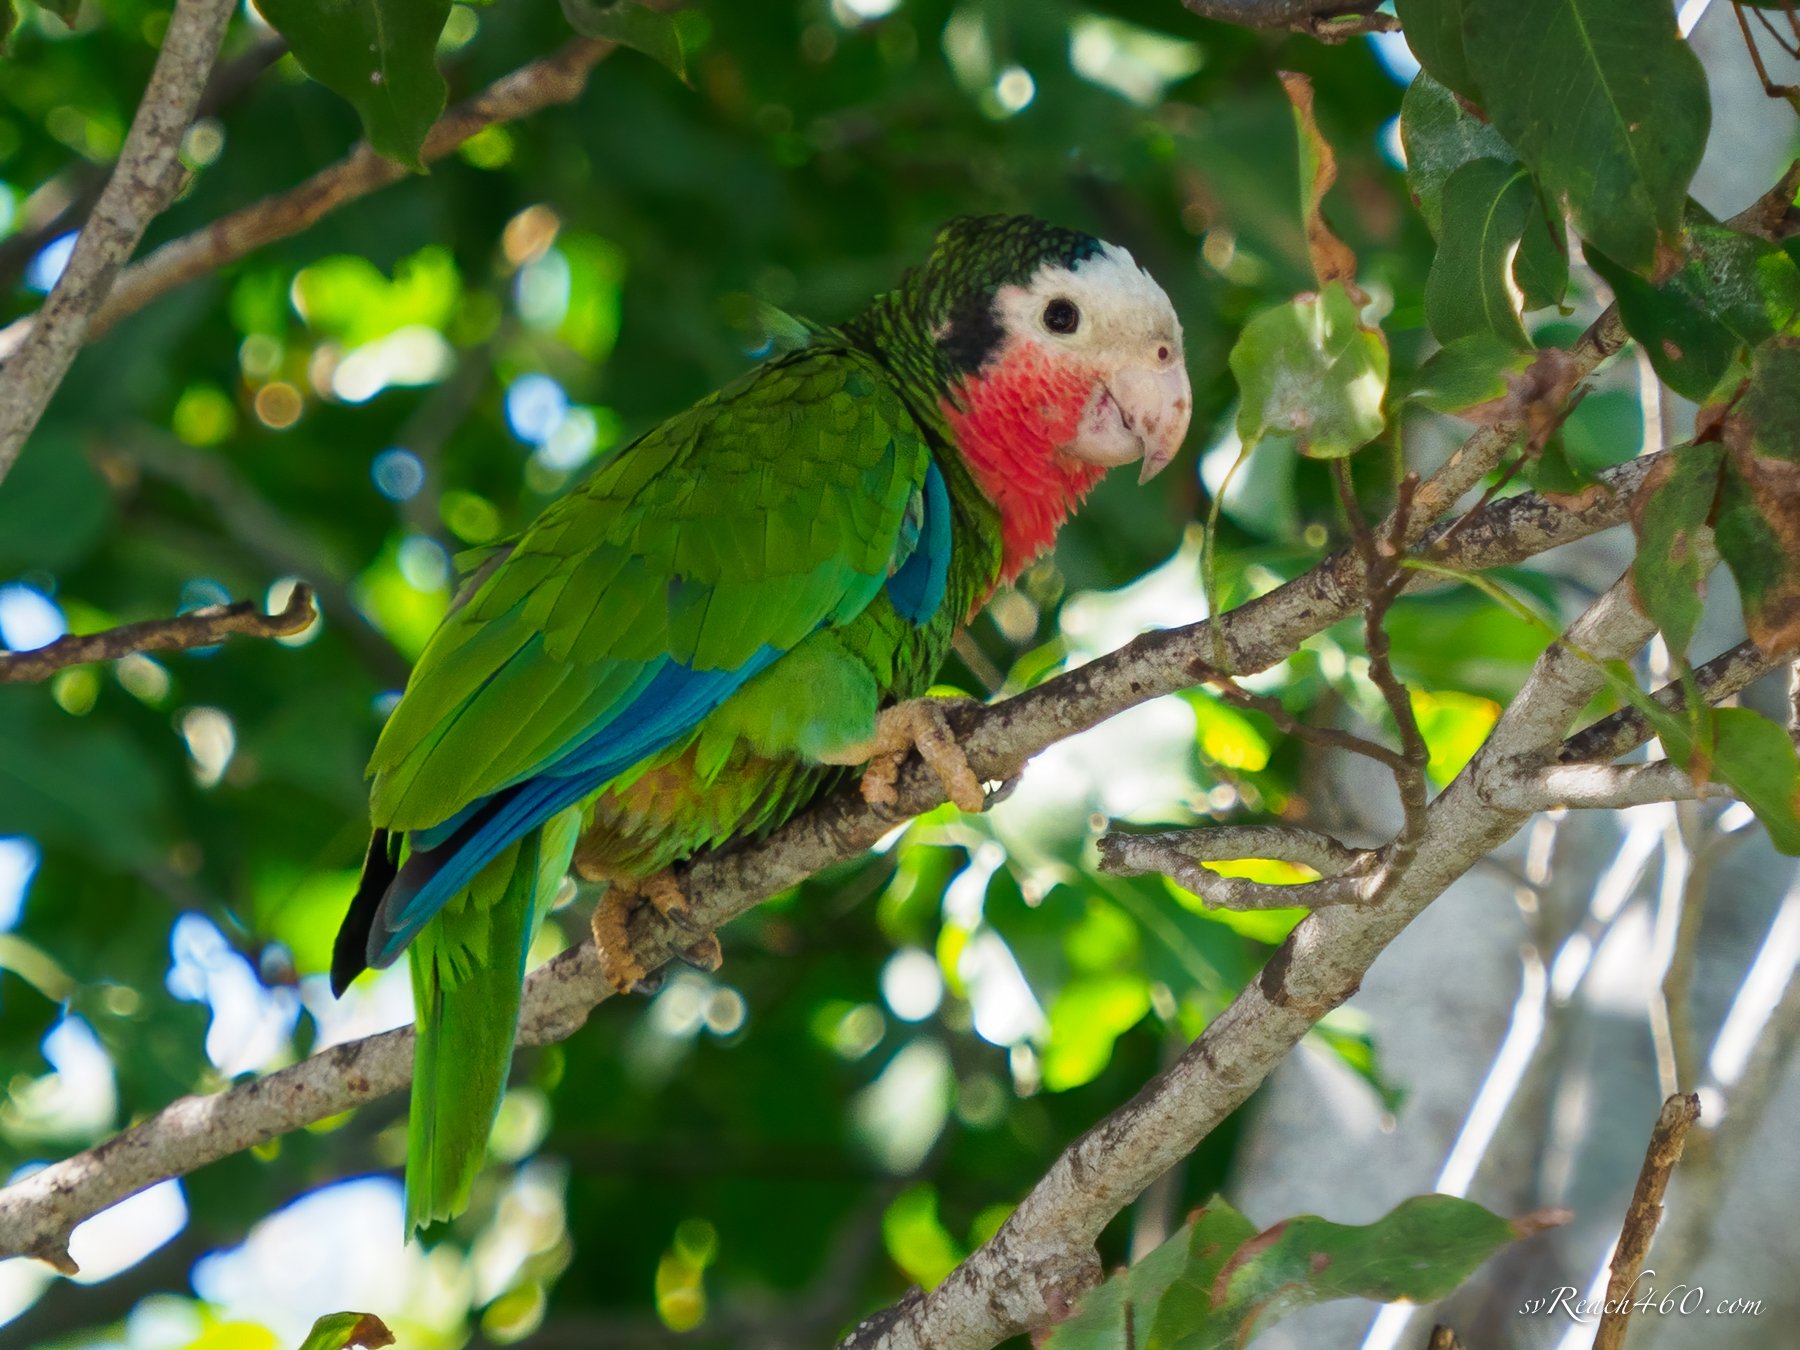 Cuban/Bahama parrot